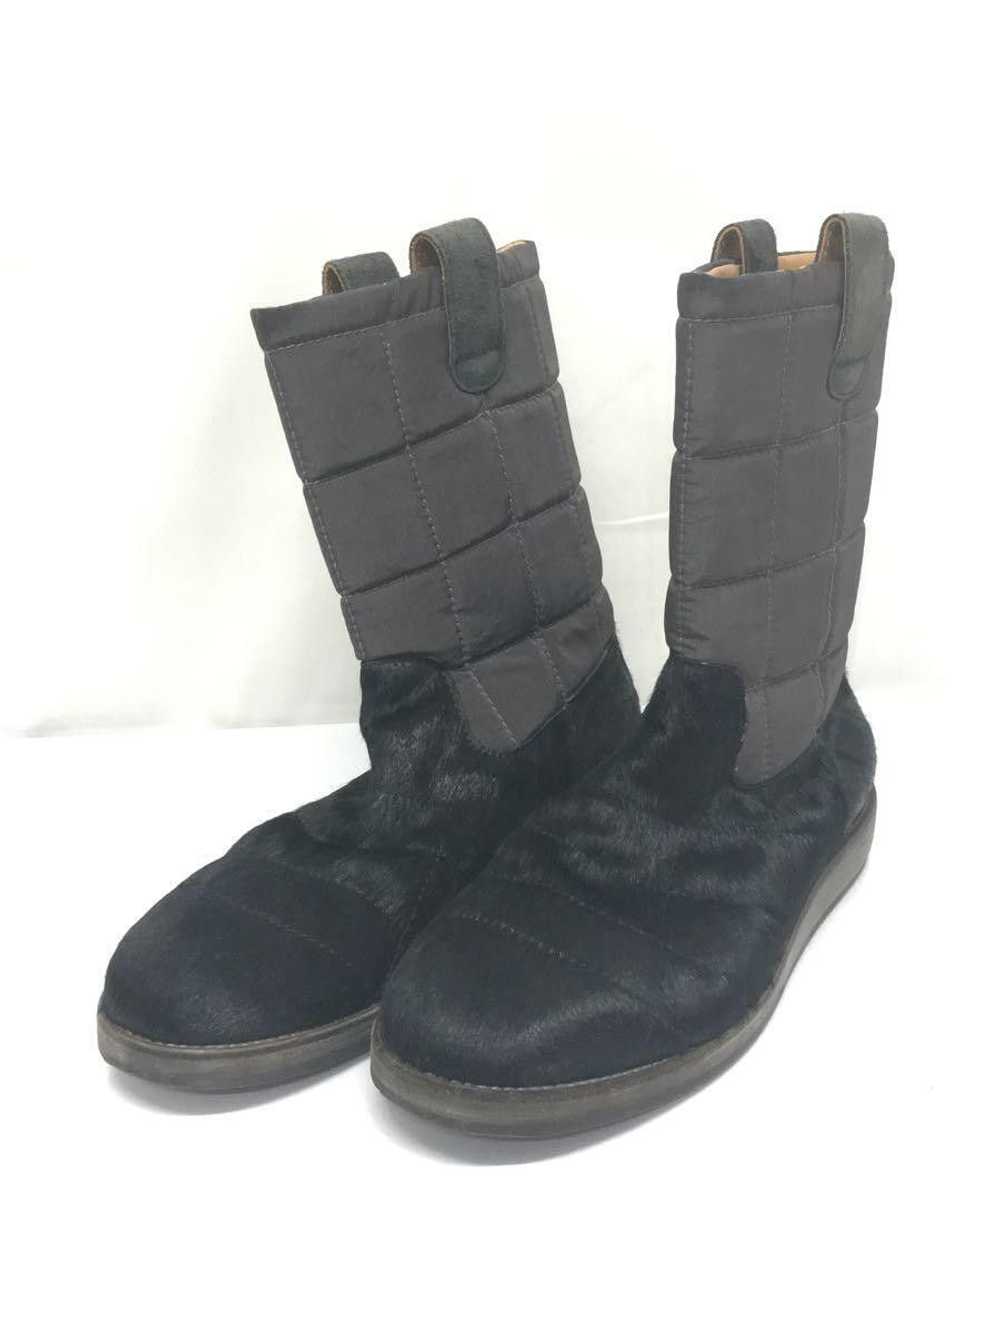 Maison Margiela Black Quilted Fur Boots - image 1